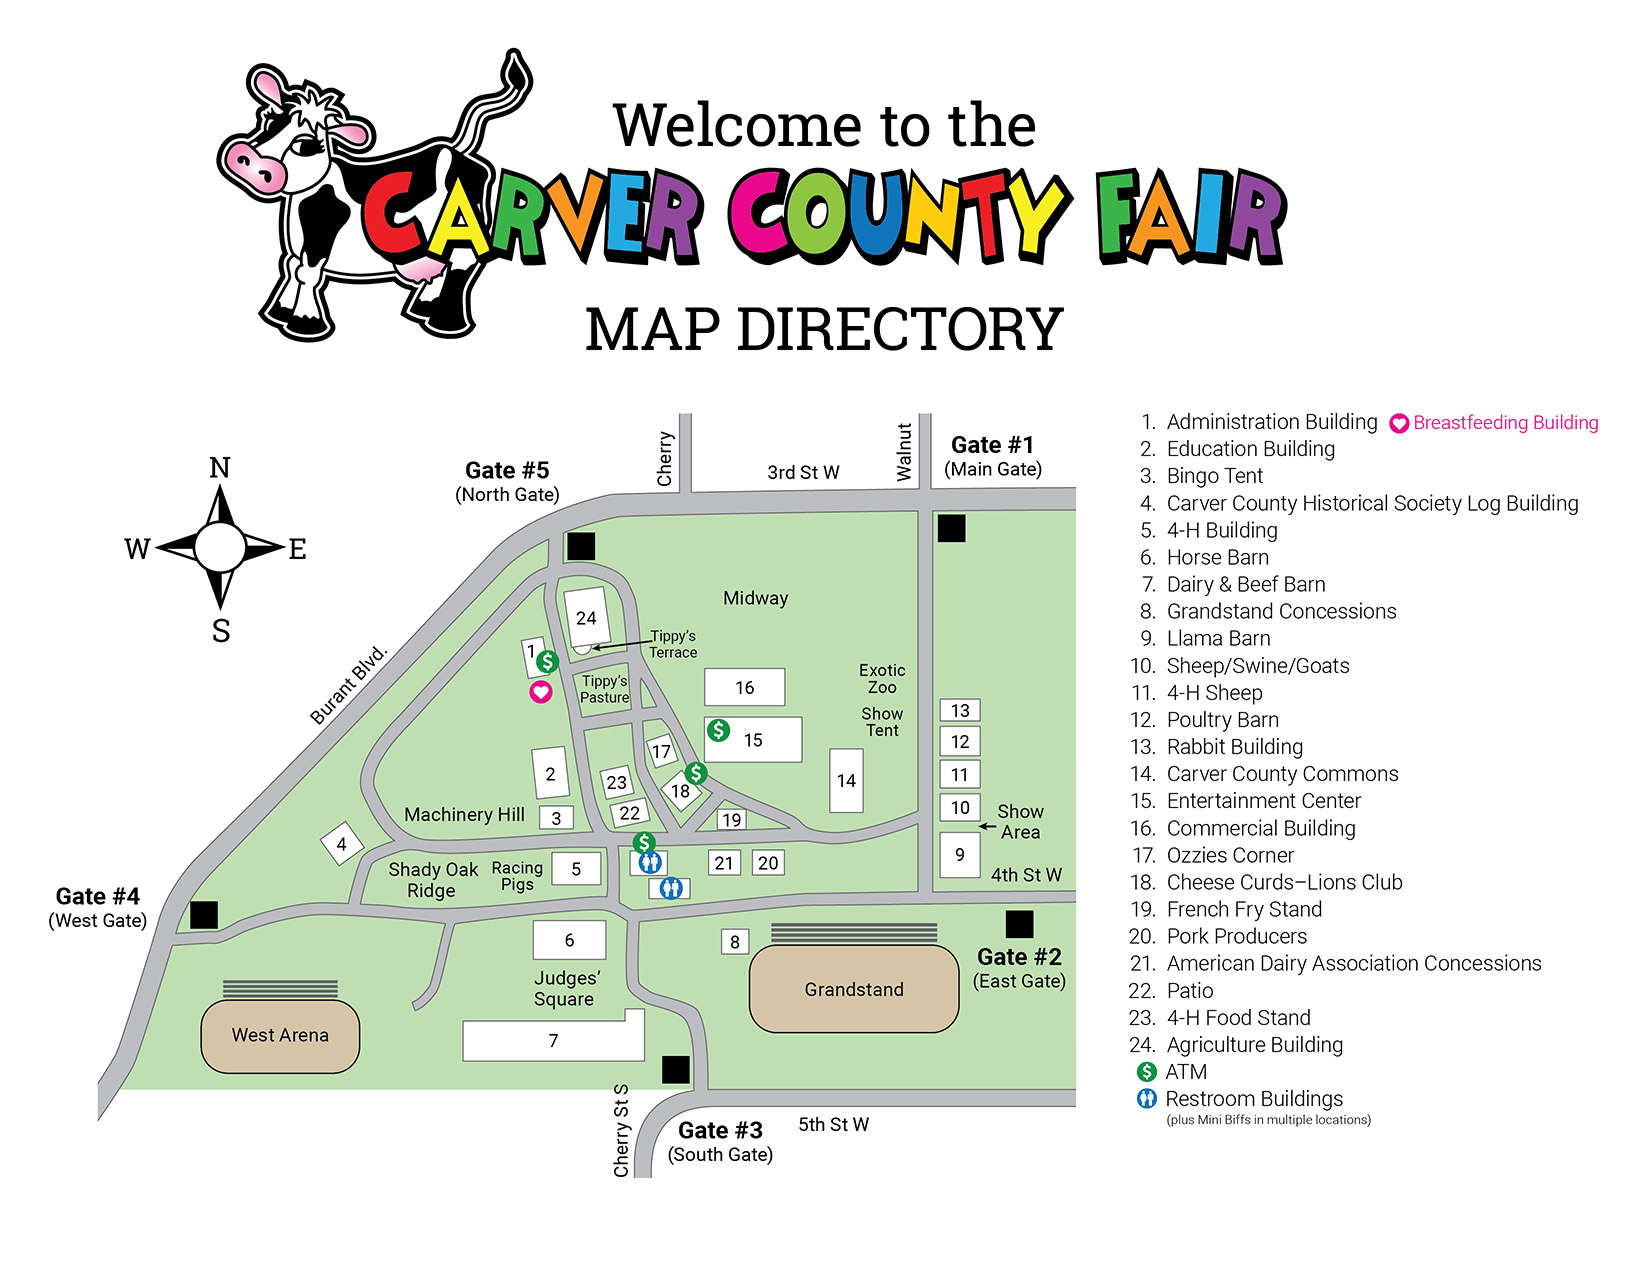 Carver County Fair Map Directory thumbnail